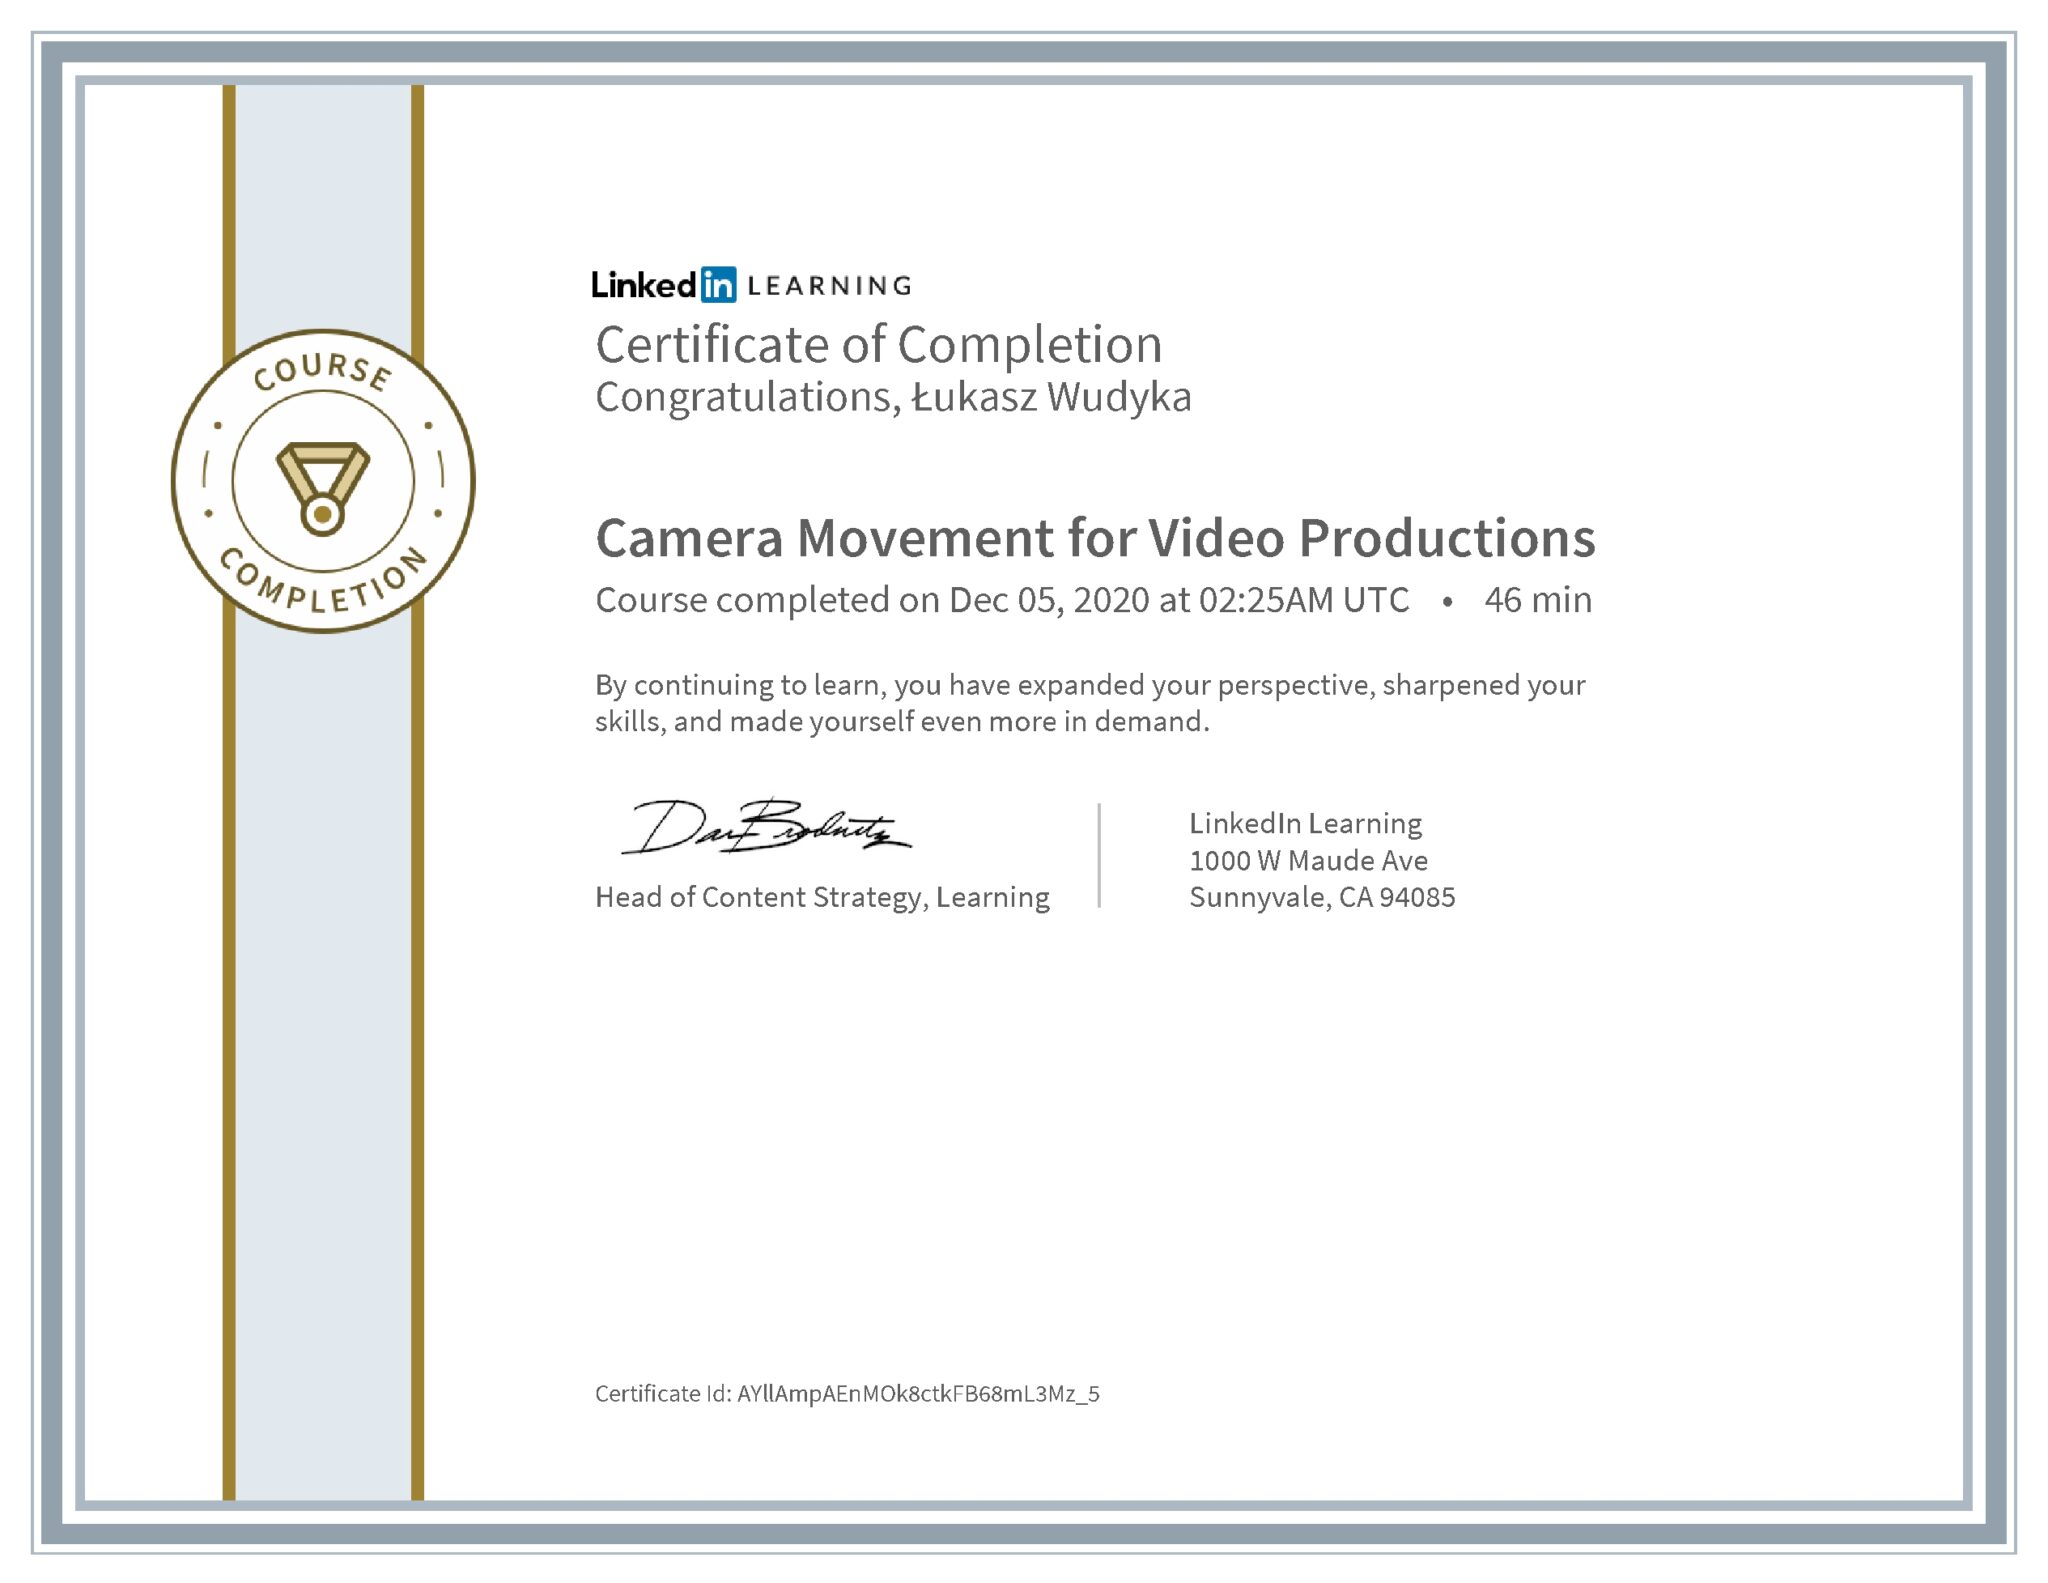 Łukasz Wudyka certyfikat LinkedIn Camera Movement for Video Productions